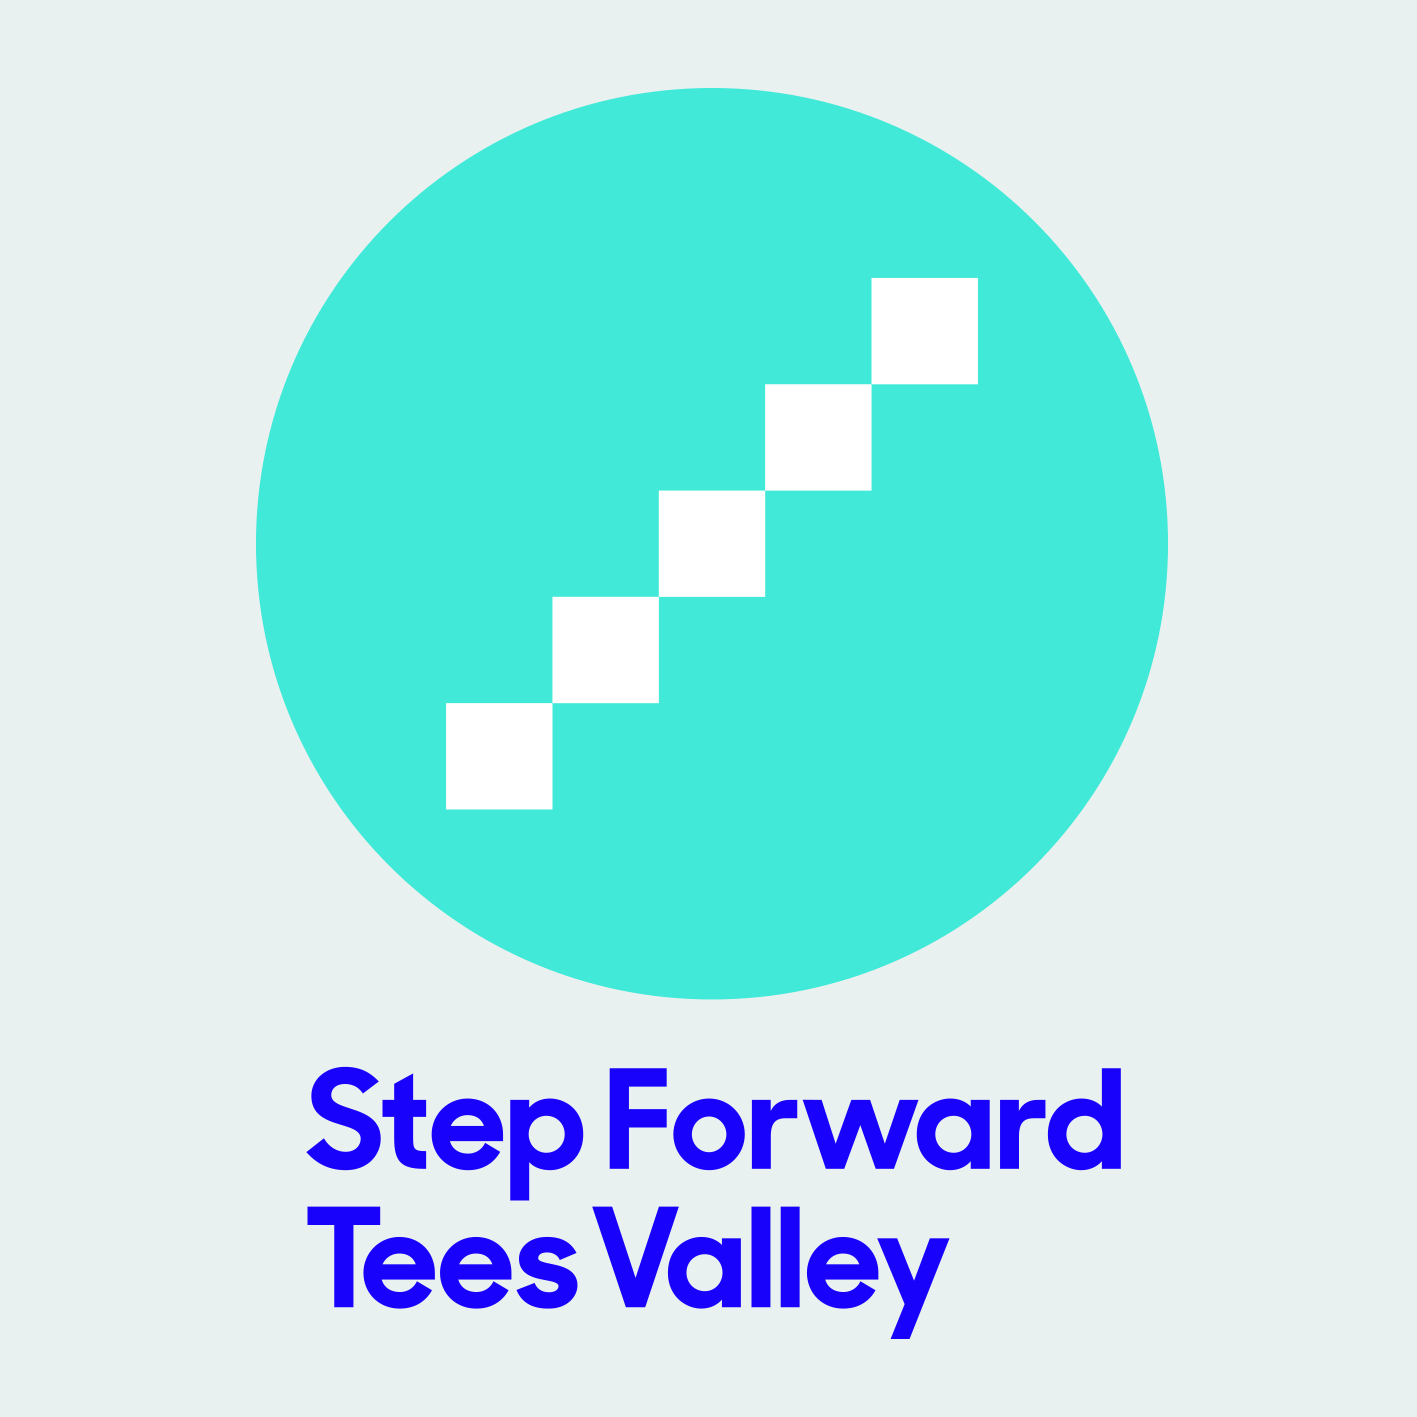 Step Forward Tees Valley